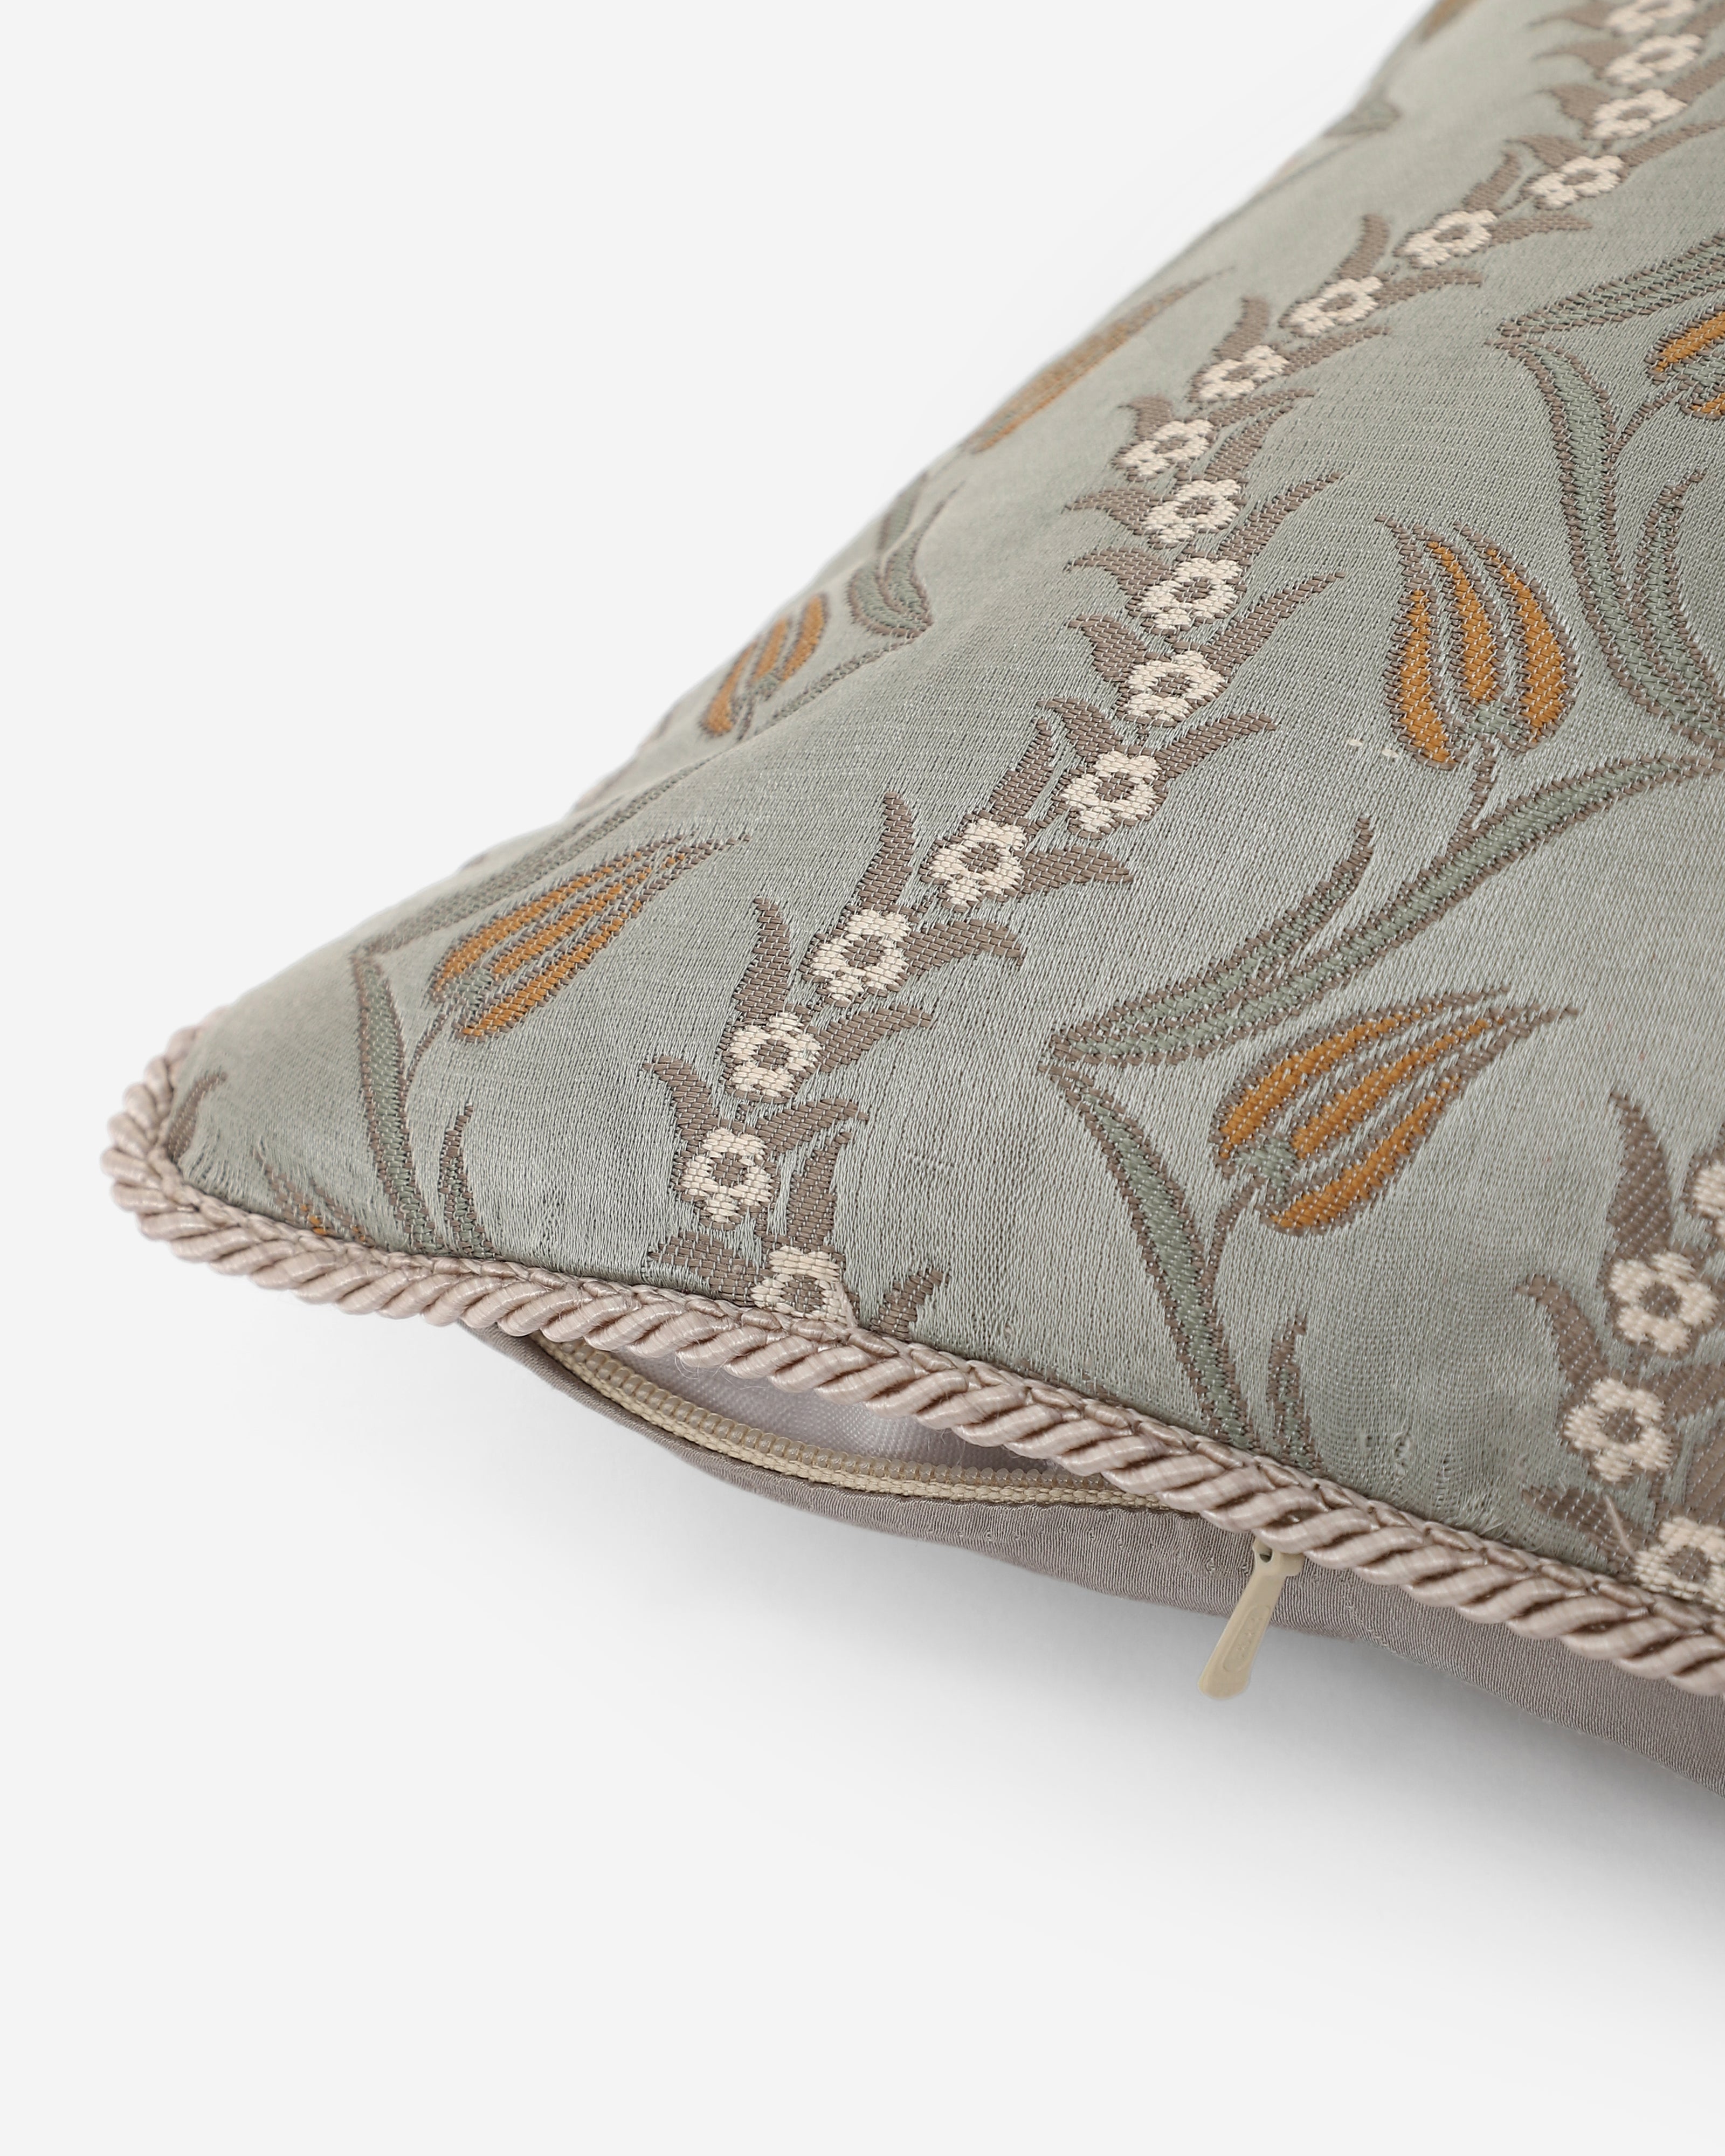 Ediz Satin Brocade Silk Cushion Cover - Medium Beige